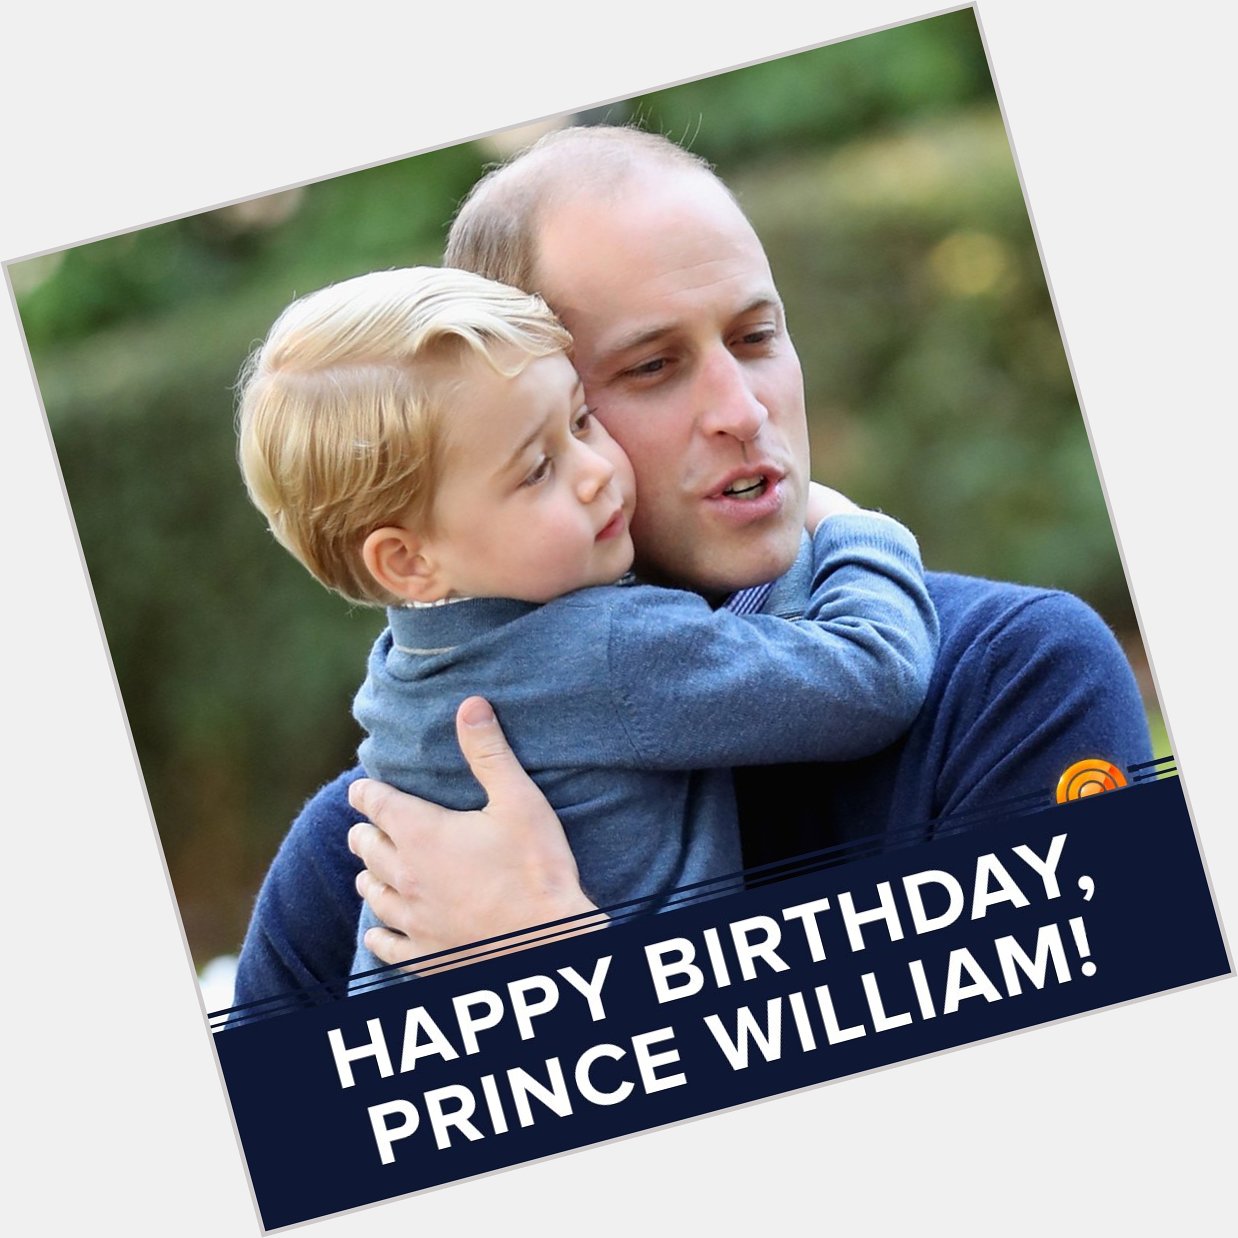 Happy 35th birthday, Prince William! 